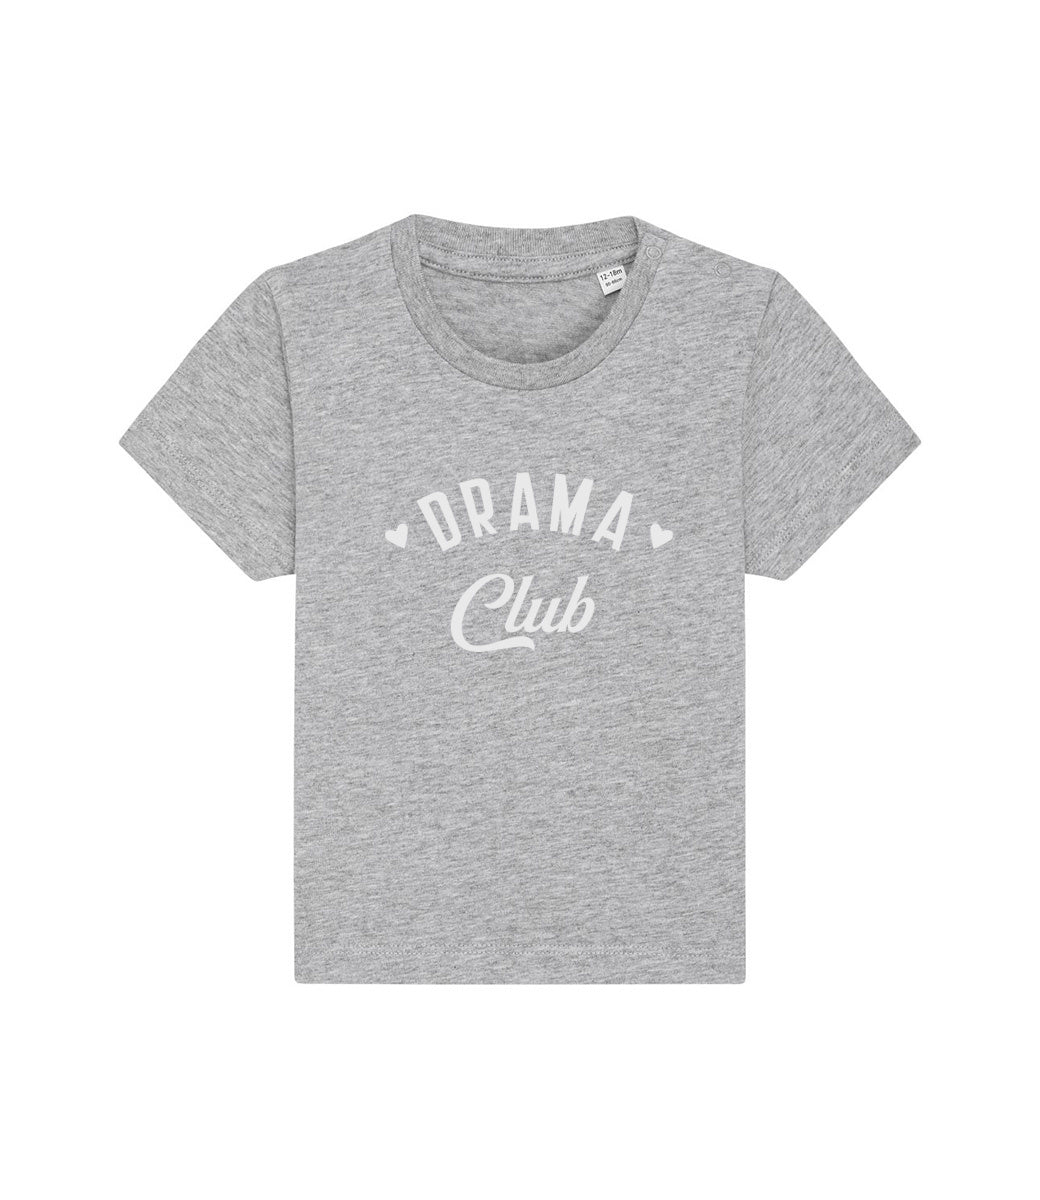 Organic baby t-shirt // Drama club